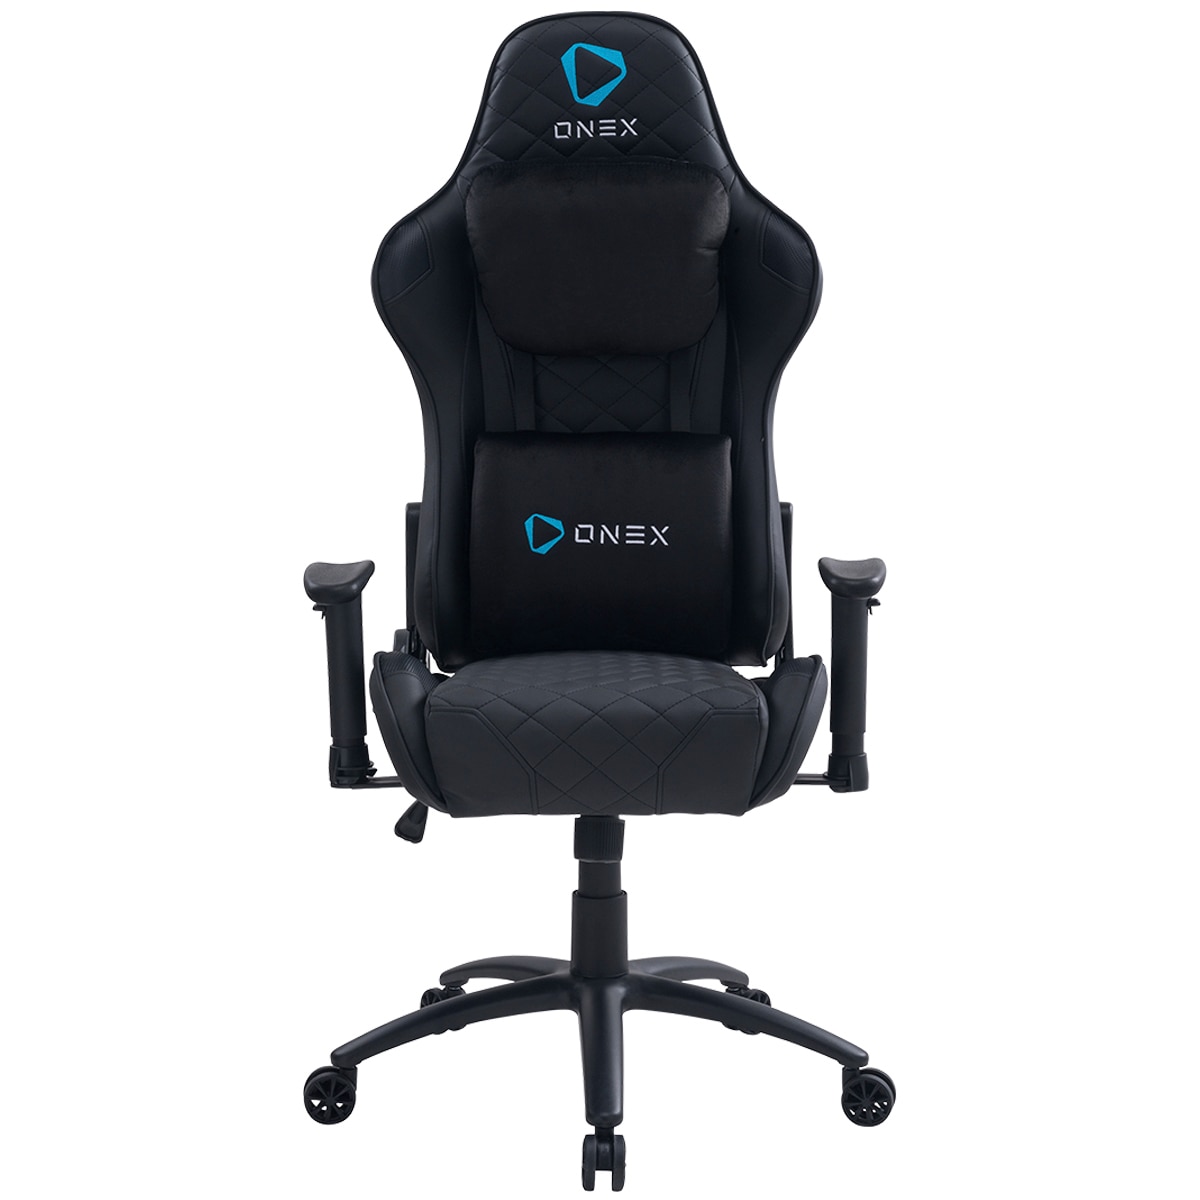 Onex Gx330 Series Gaming Chair Costco Australia